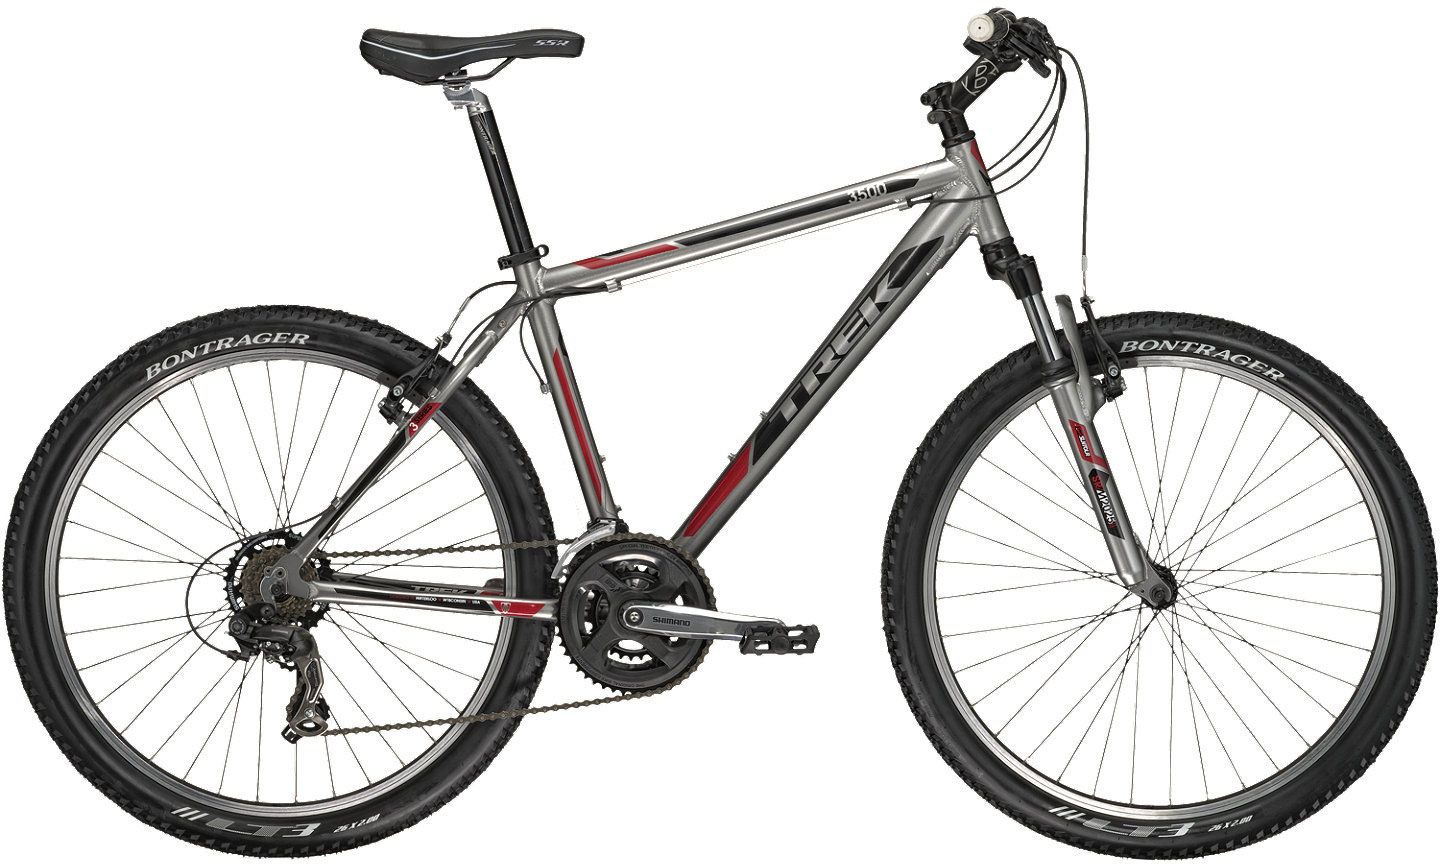 price of trek 3500 mountain bike